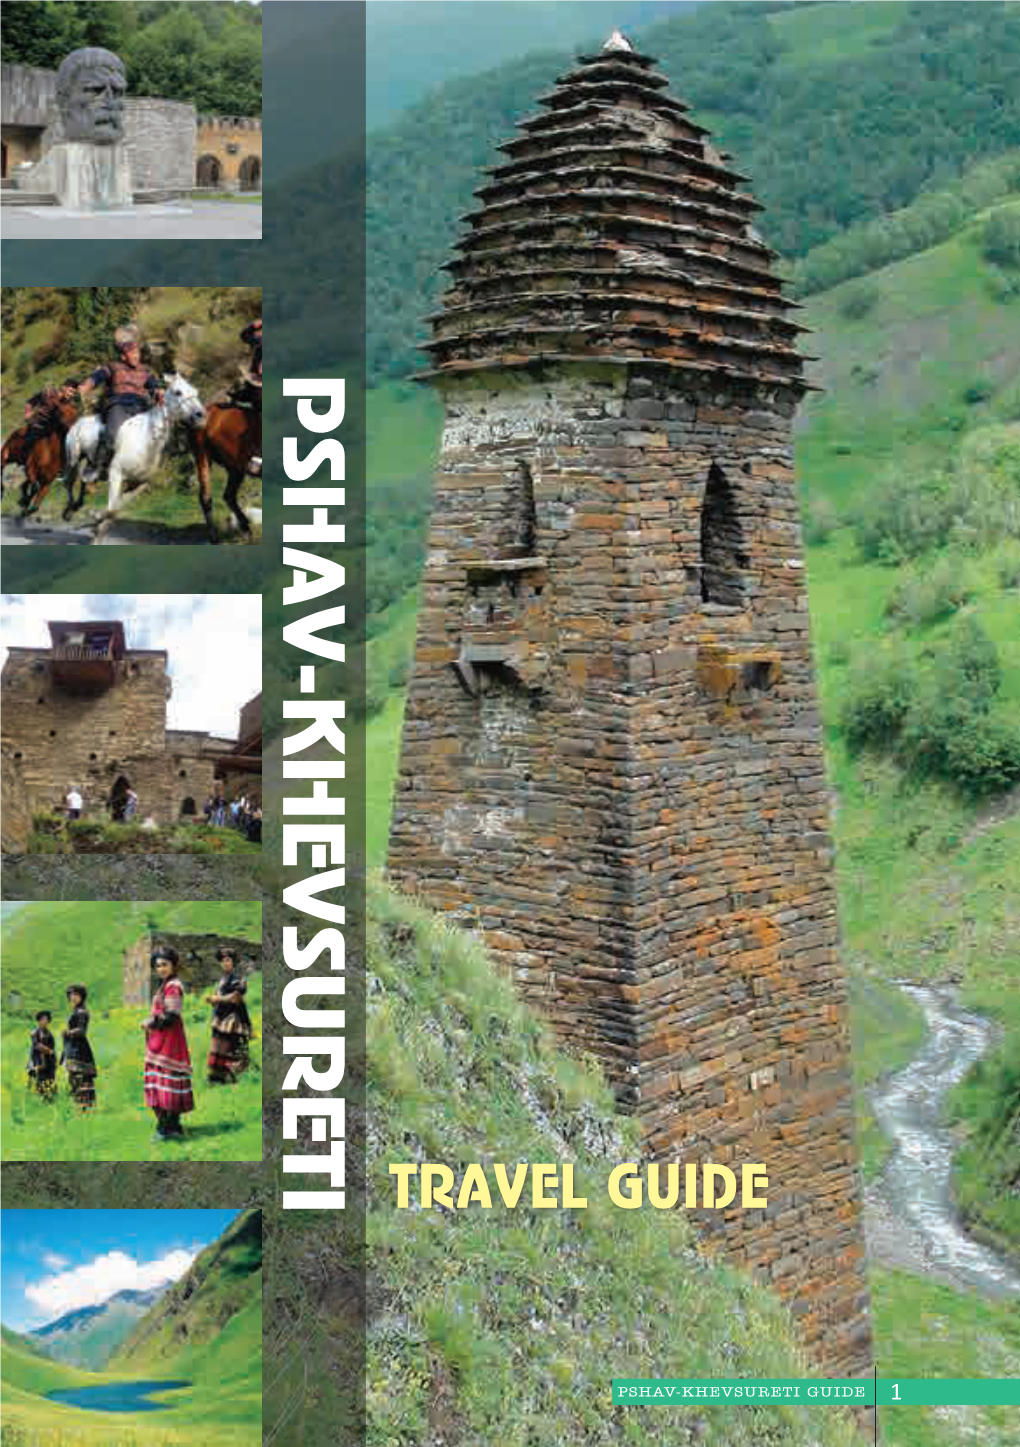 Pshav-Khevsureti Travel Guide